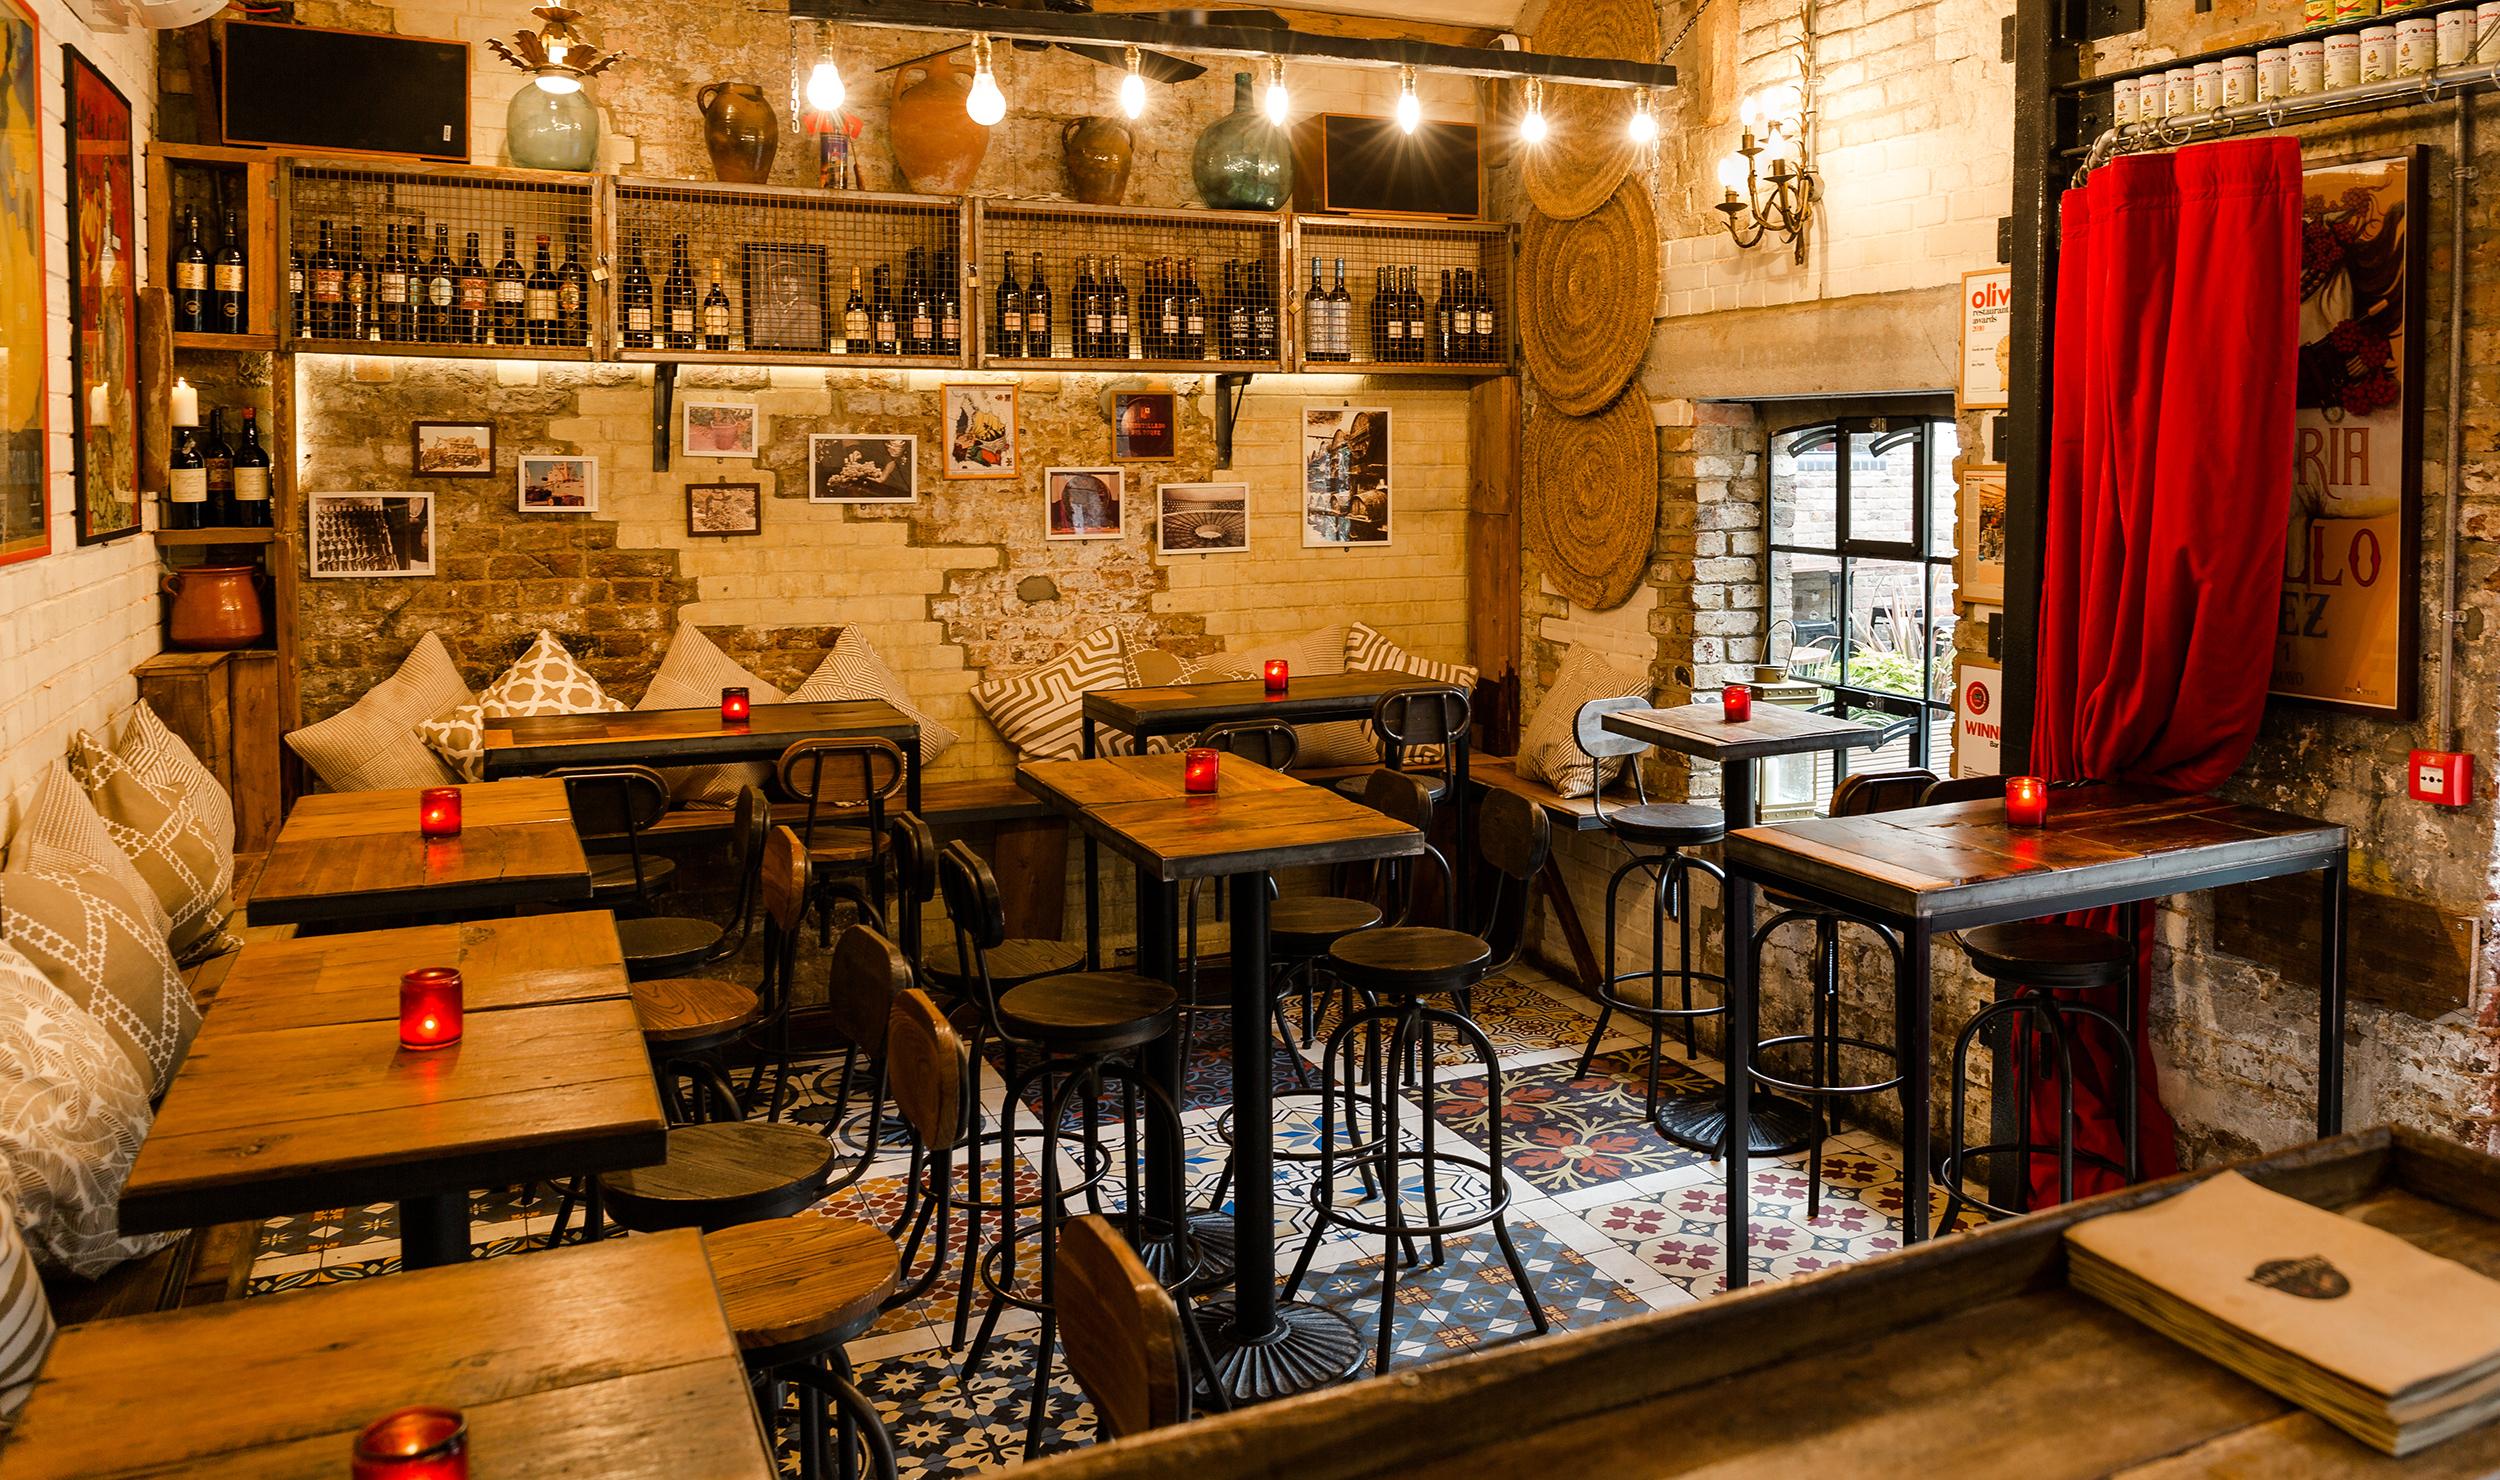 Camino Kings Cross/Bar Rioja, Bar Rioja – Wine Bar photo #3